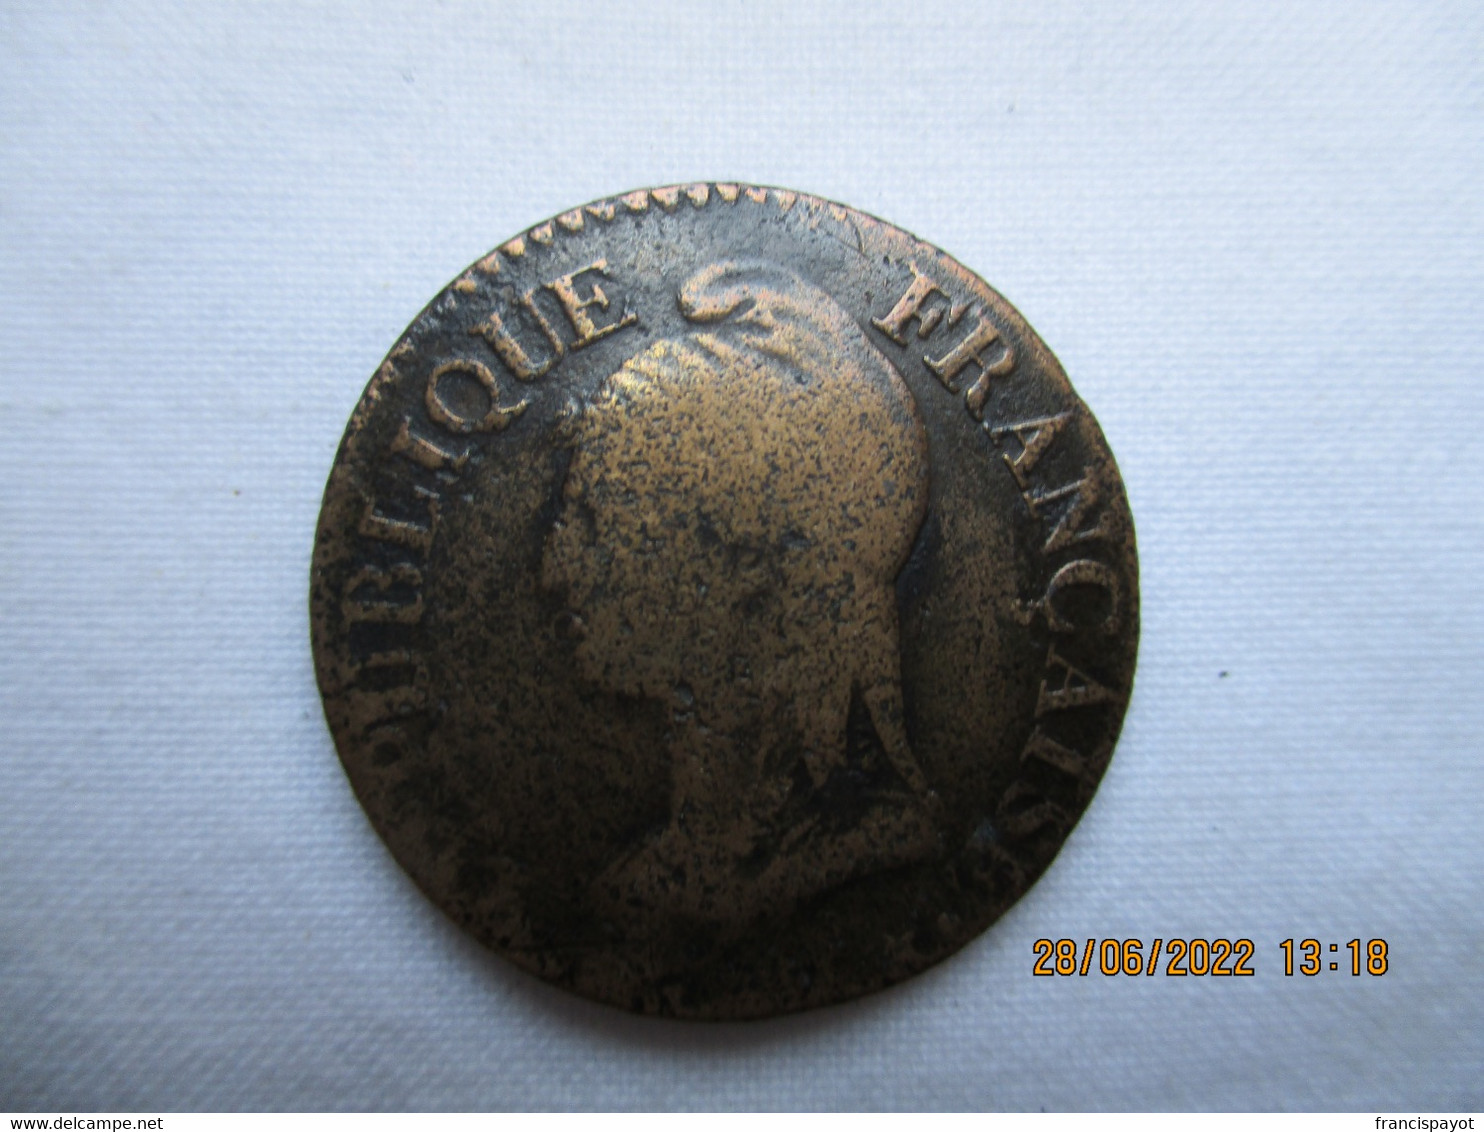 France: 5 Centimes An 5 I (Limoges) - 1795-1799 Directoire (An IV – An VIII)